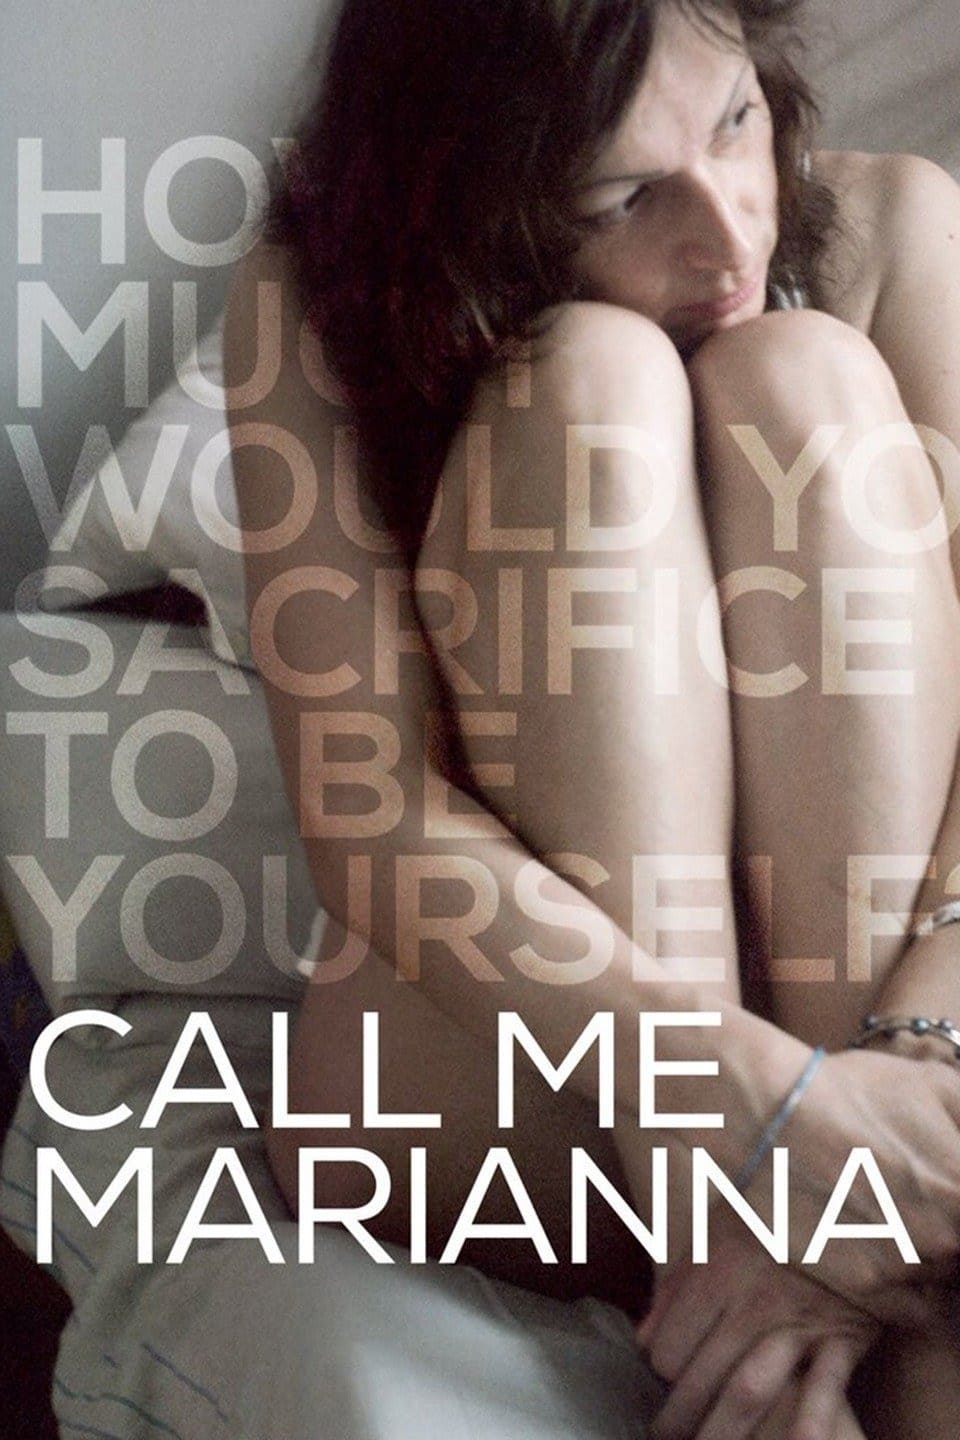 Call Me Marianna